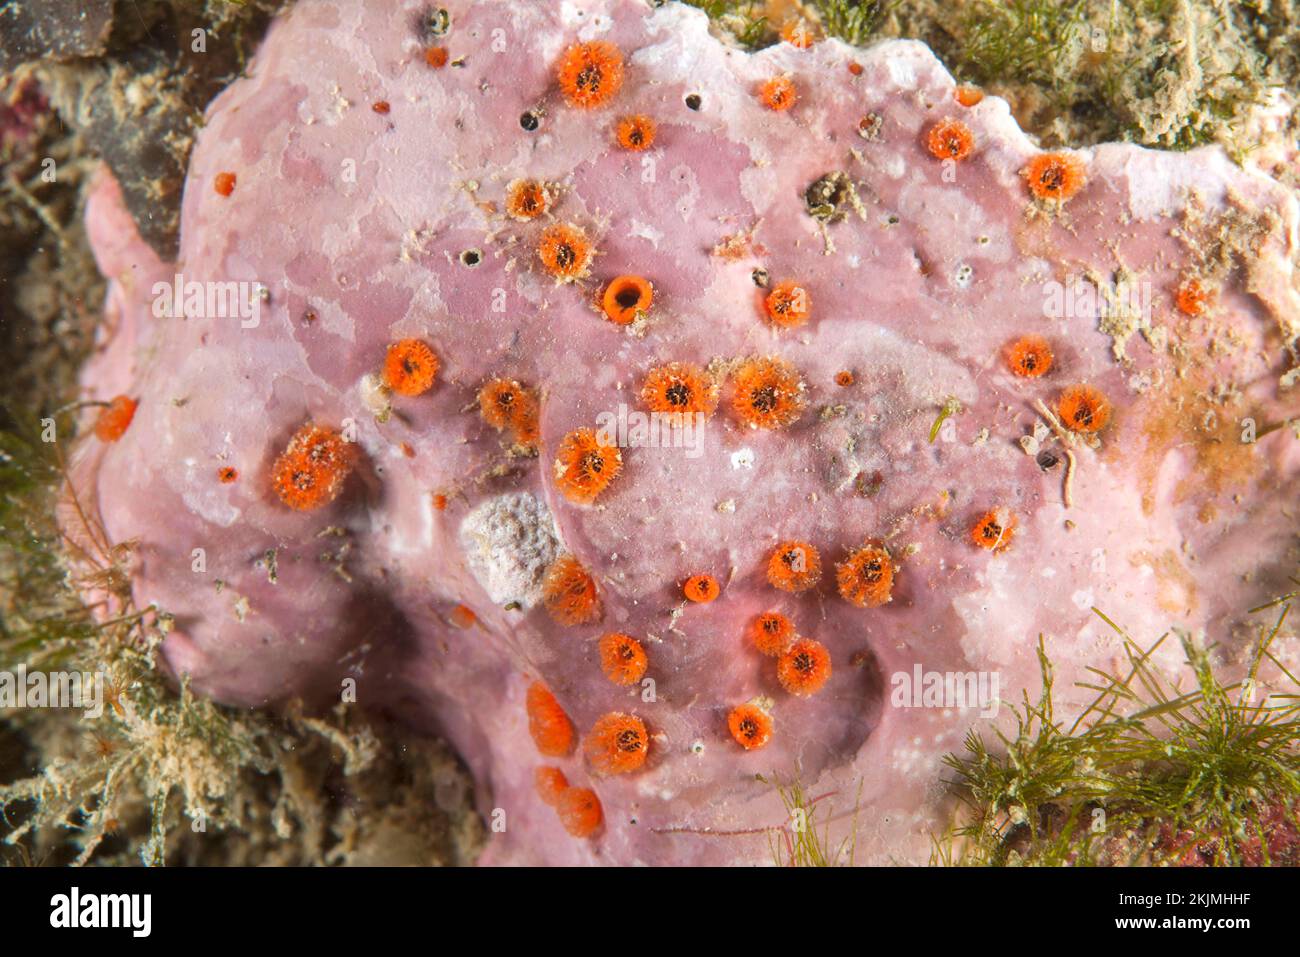 Red boring sponge (Pione vastifica), 'côte agathoise' Marine Protected Area, gulf of Lion, Cap d'Agde, France, Europe Stock Photo